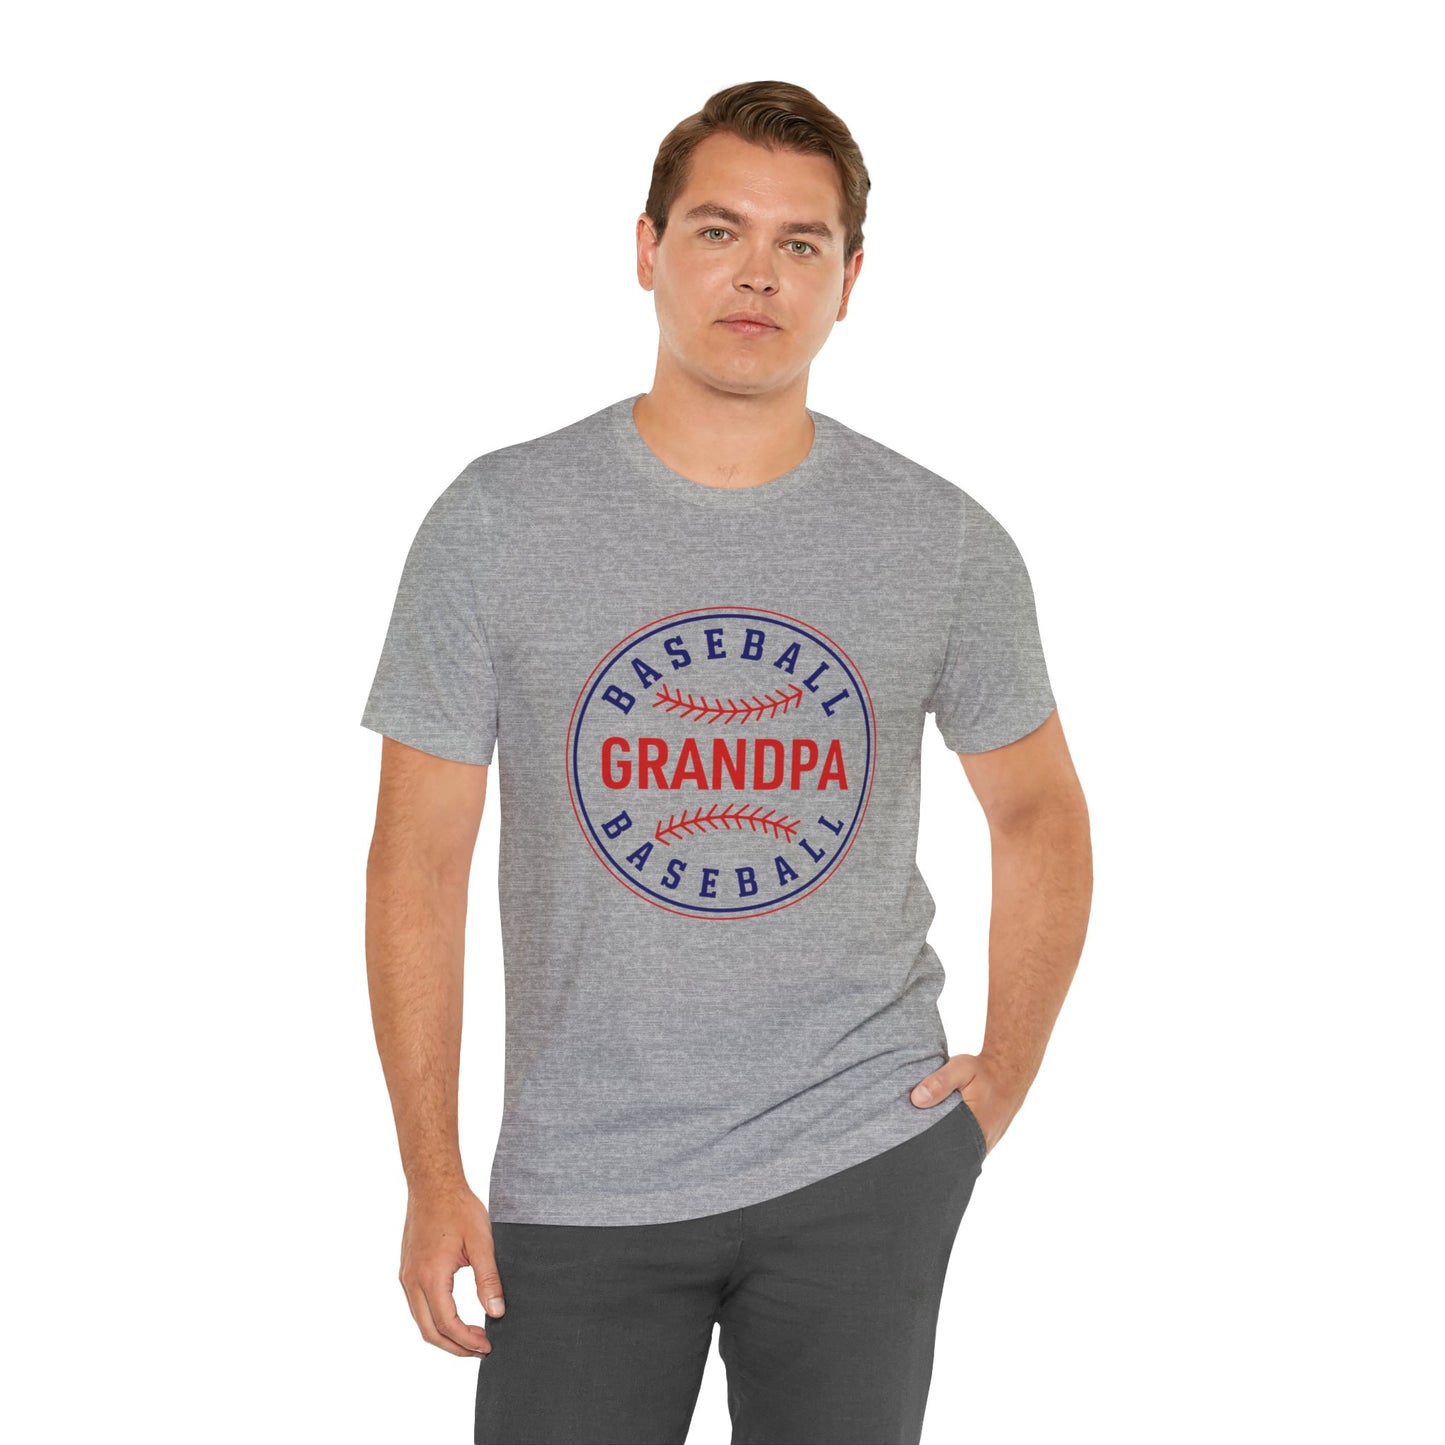 Baseball Grandpa Men's Short Sleeve Shirt